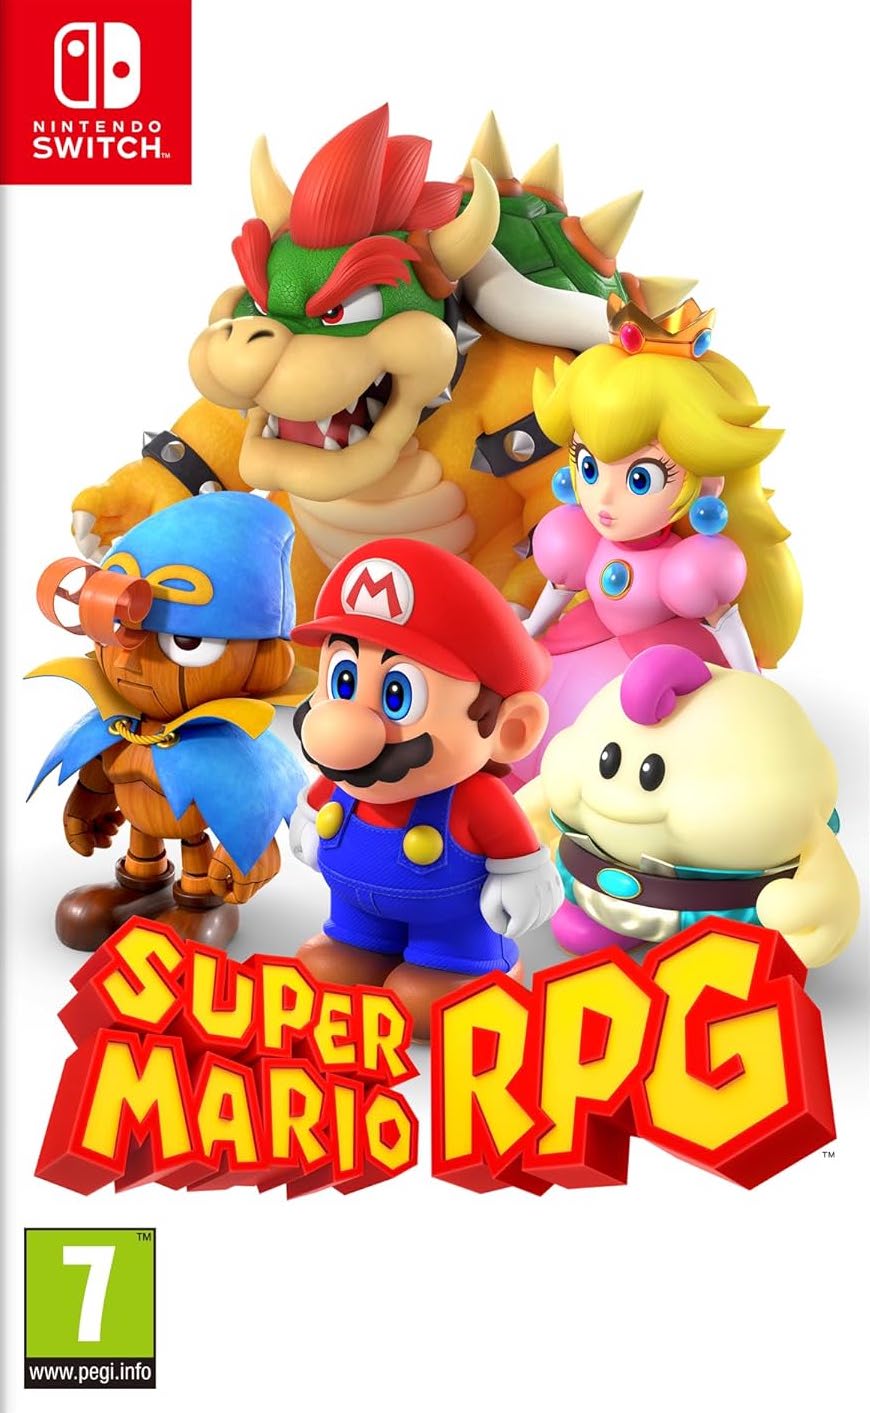 Super Mario Bros Wonder + Super Mario RPG Bundle 2 Game Pack